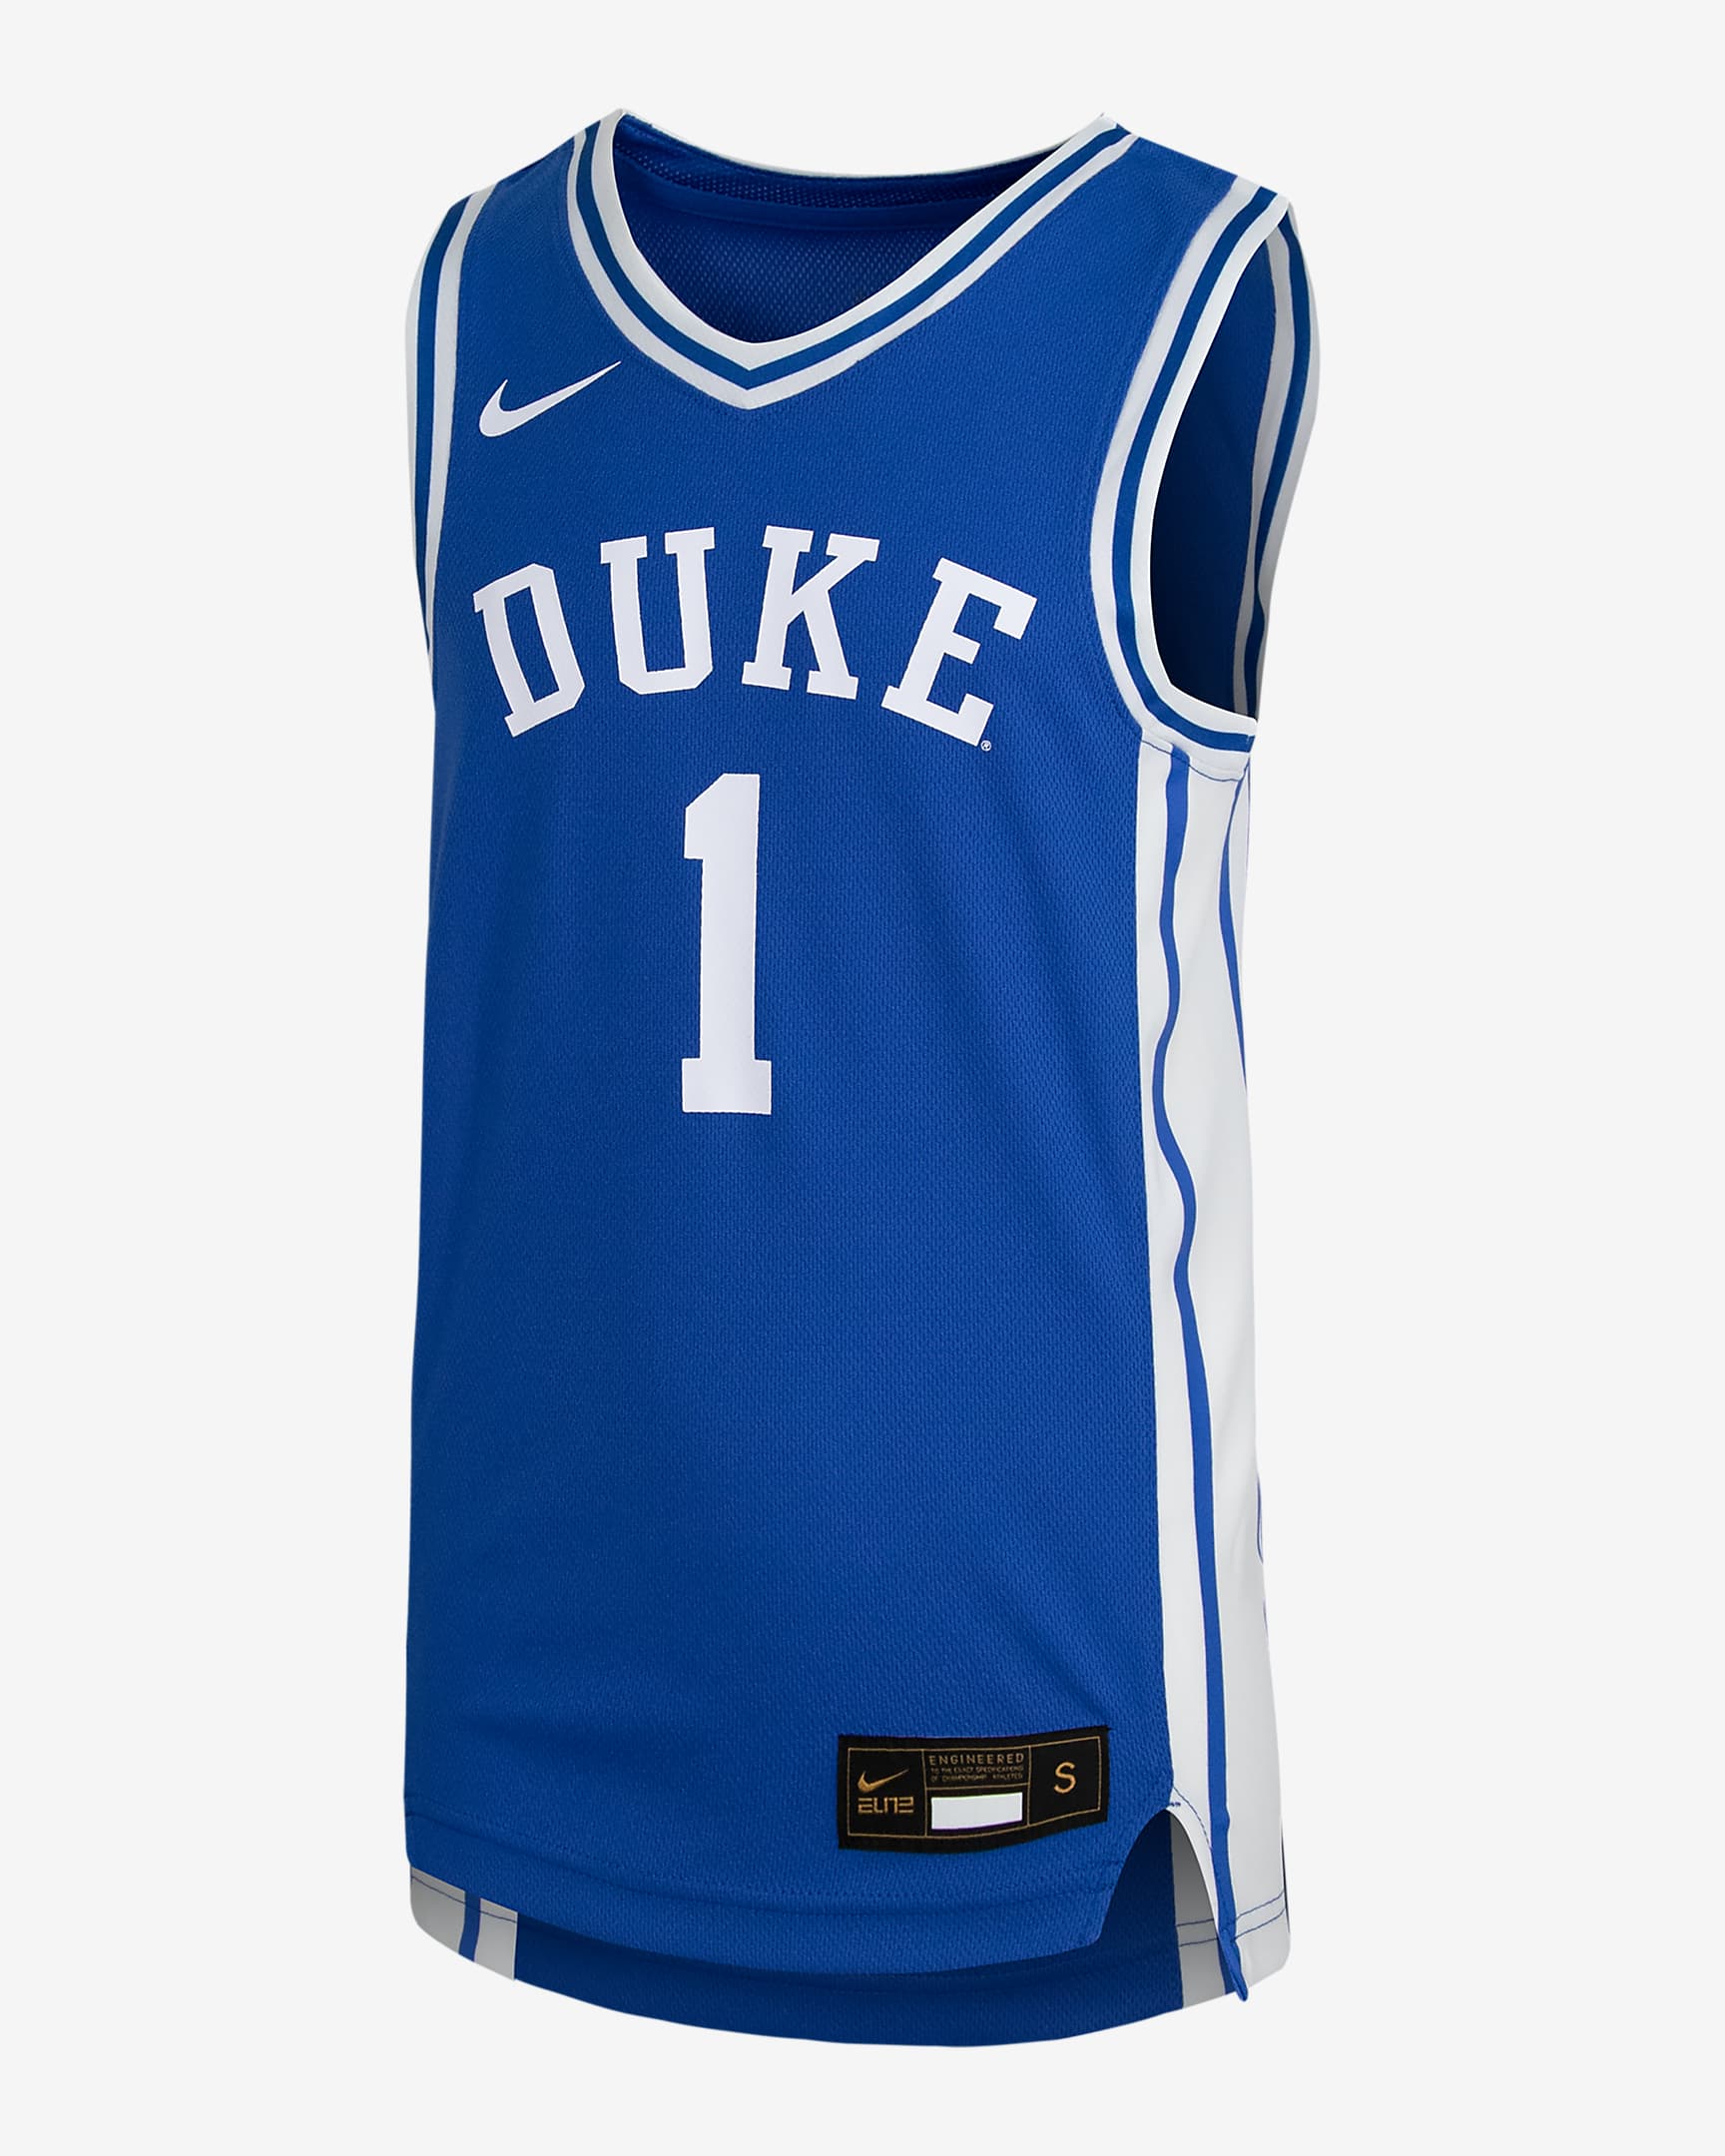 Nike College (Duke) Big Kids' Basketball Jersey. Nike.com